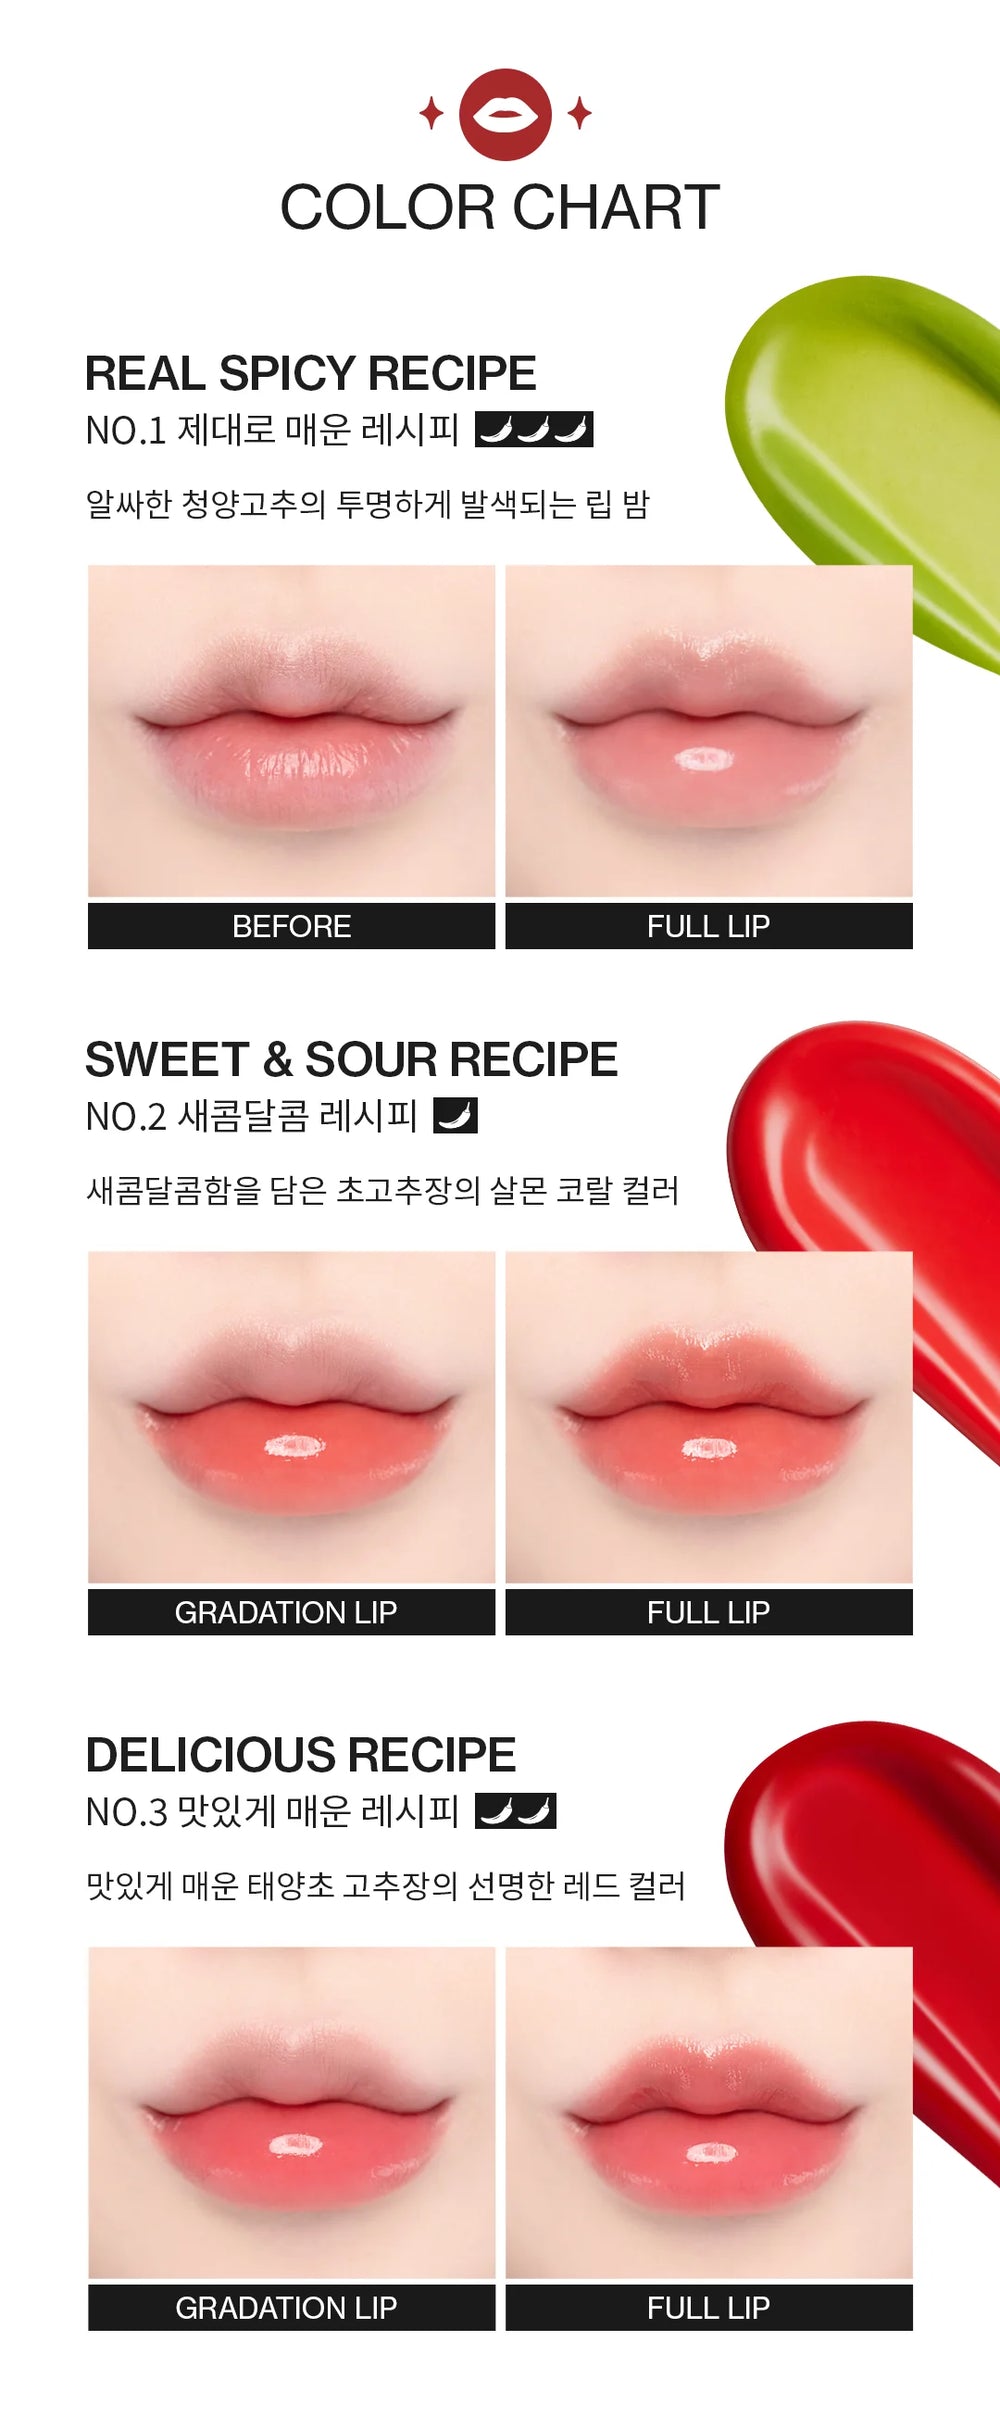 Unleashia - Red Pepper Lip Balm